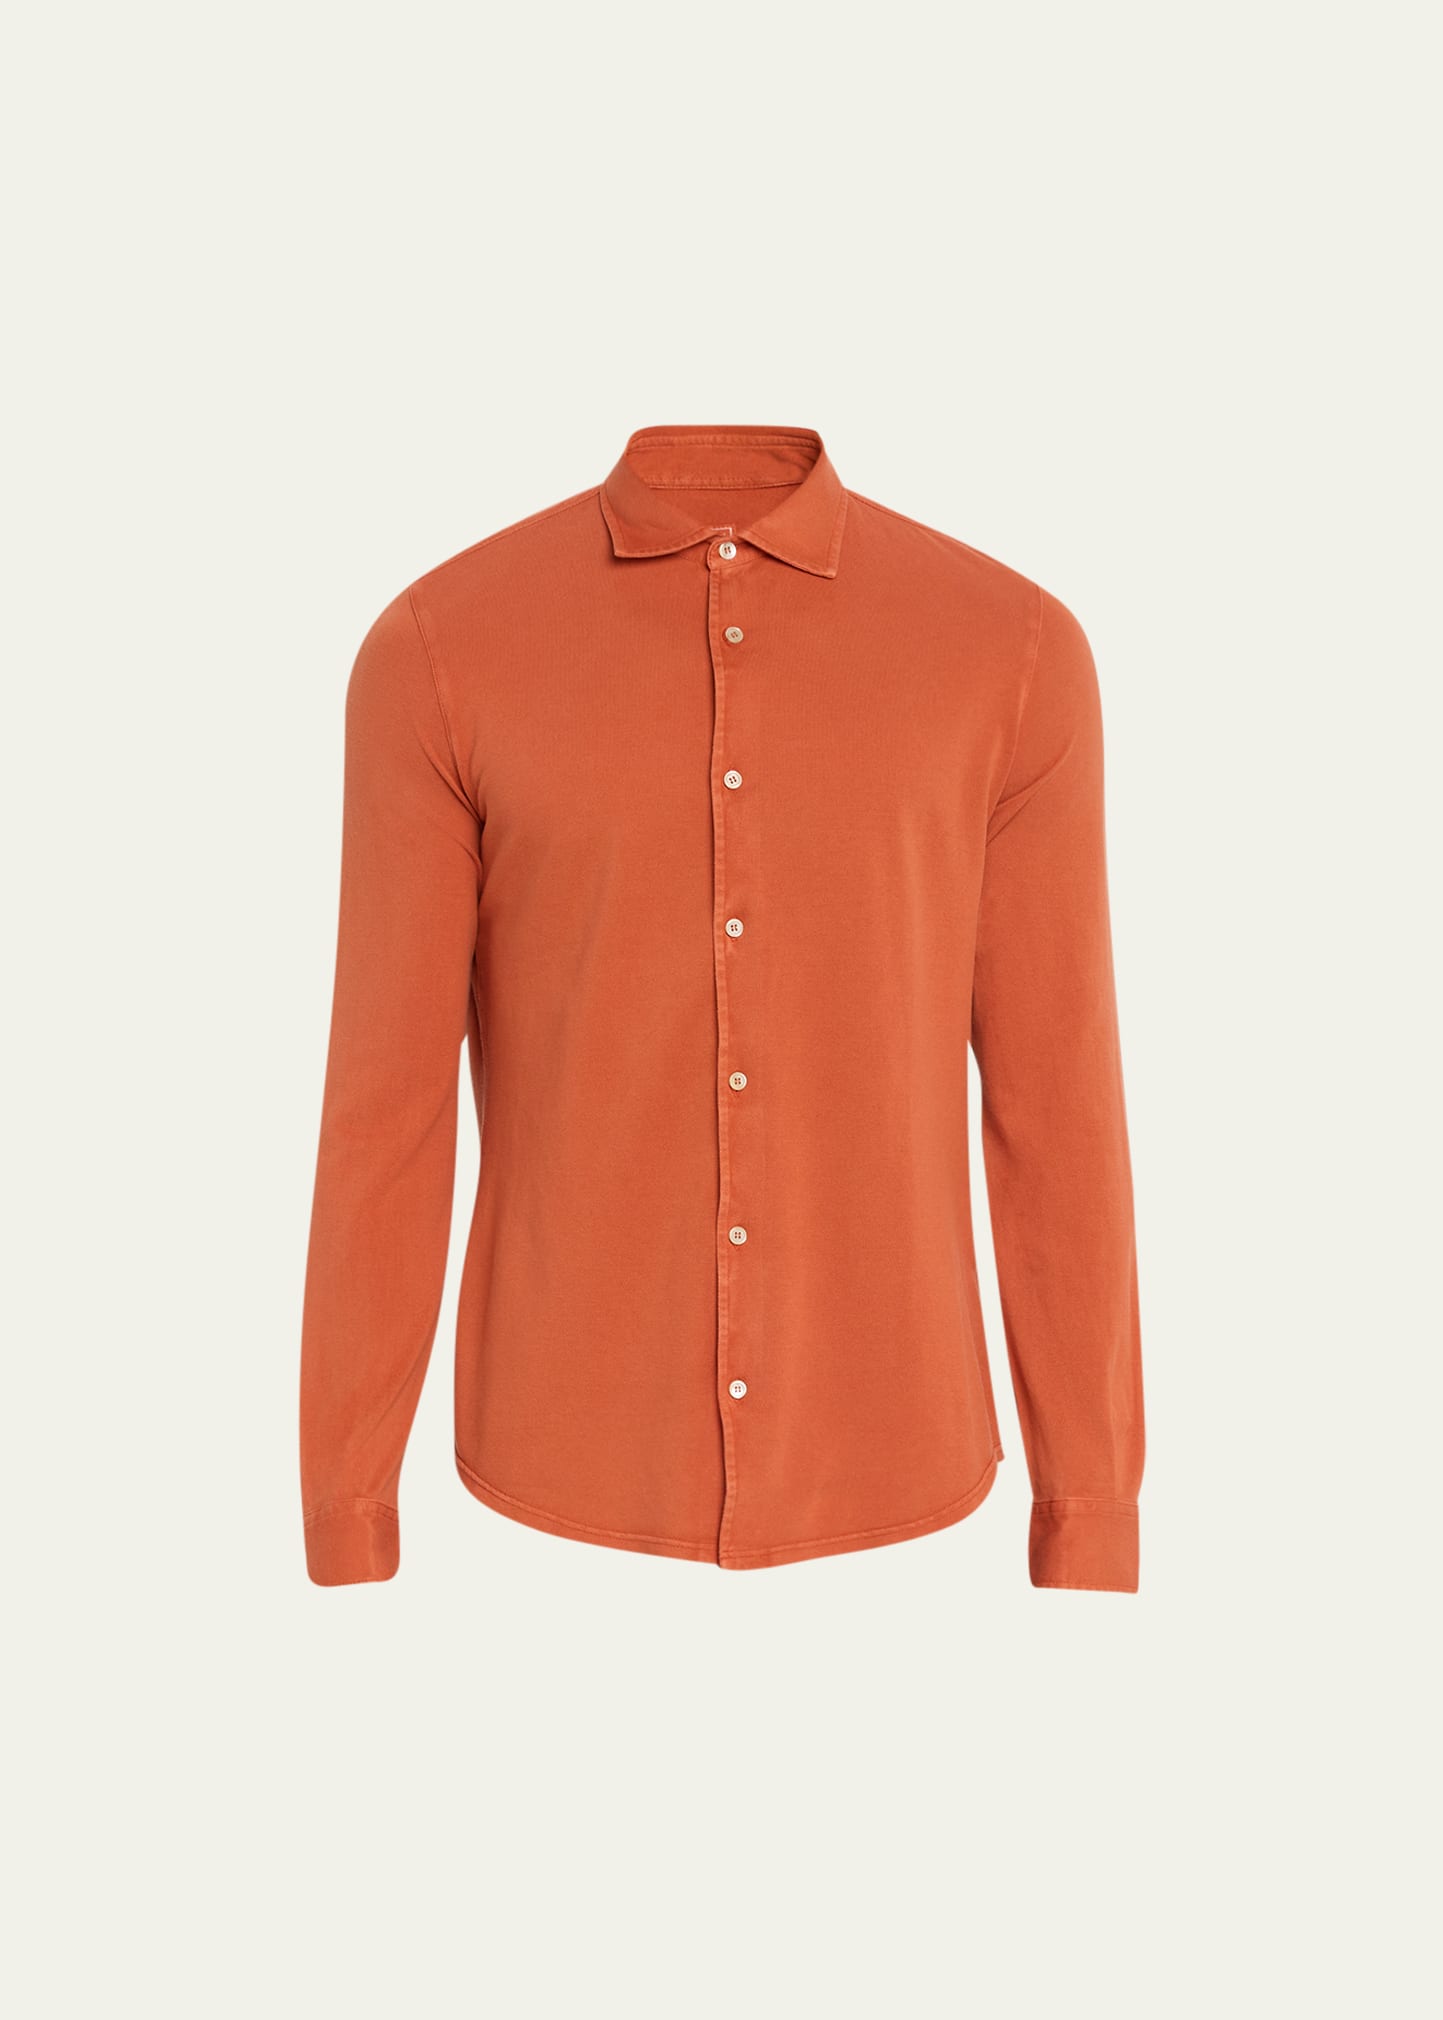 Fedeli Men's Cotton Pique Sport Shirt In Orange